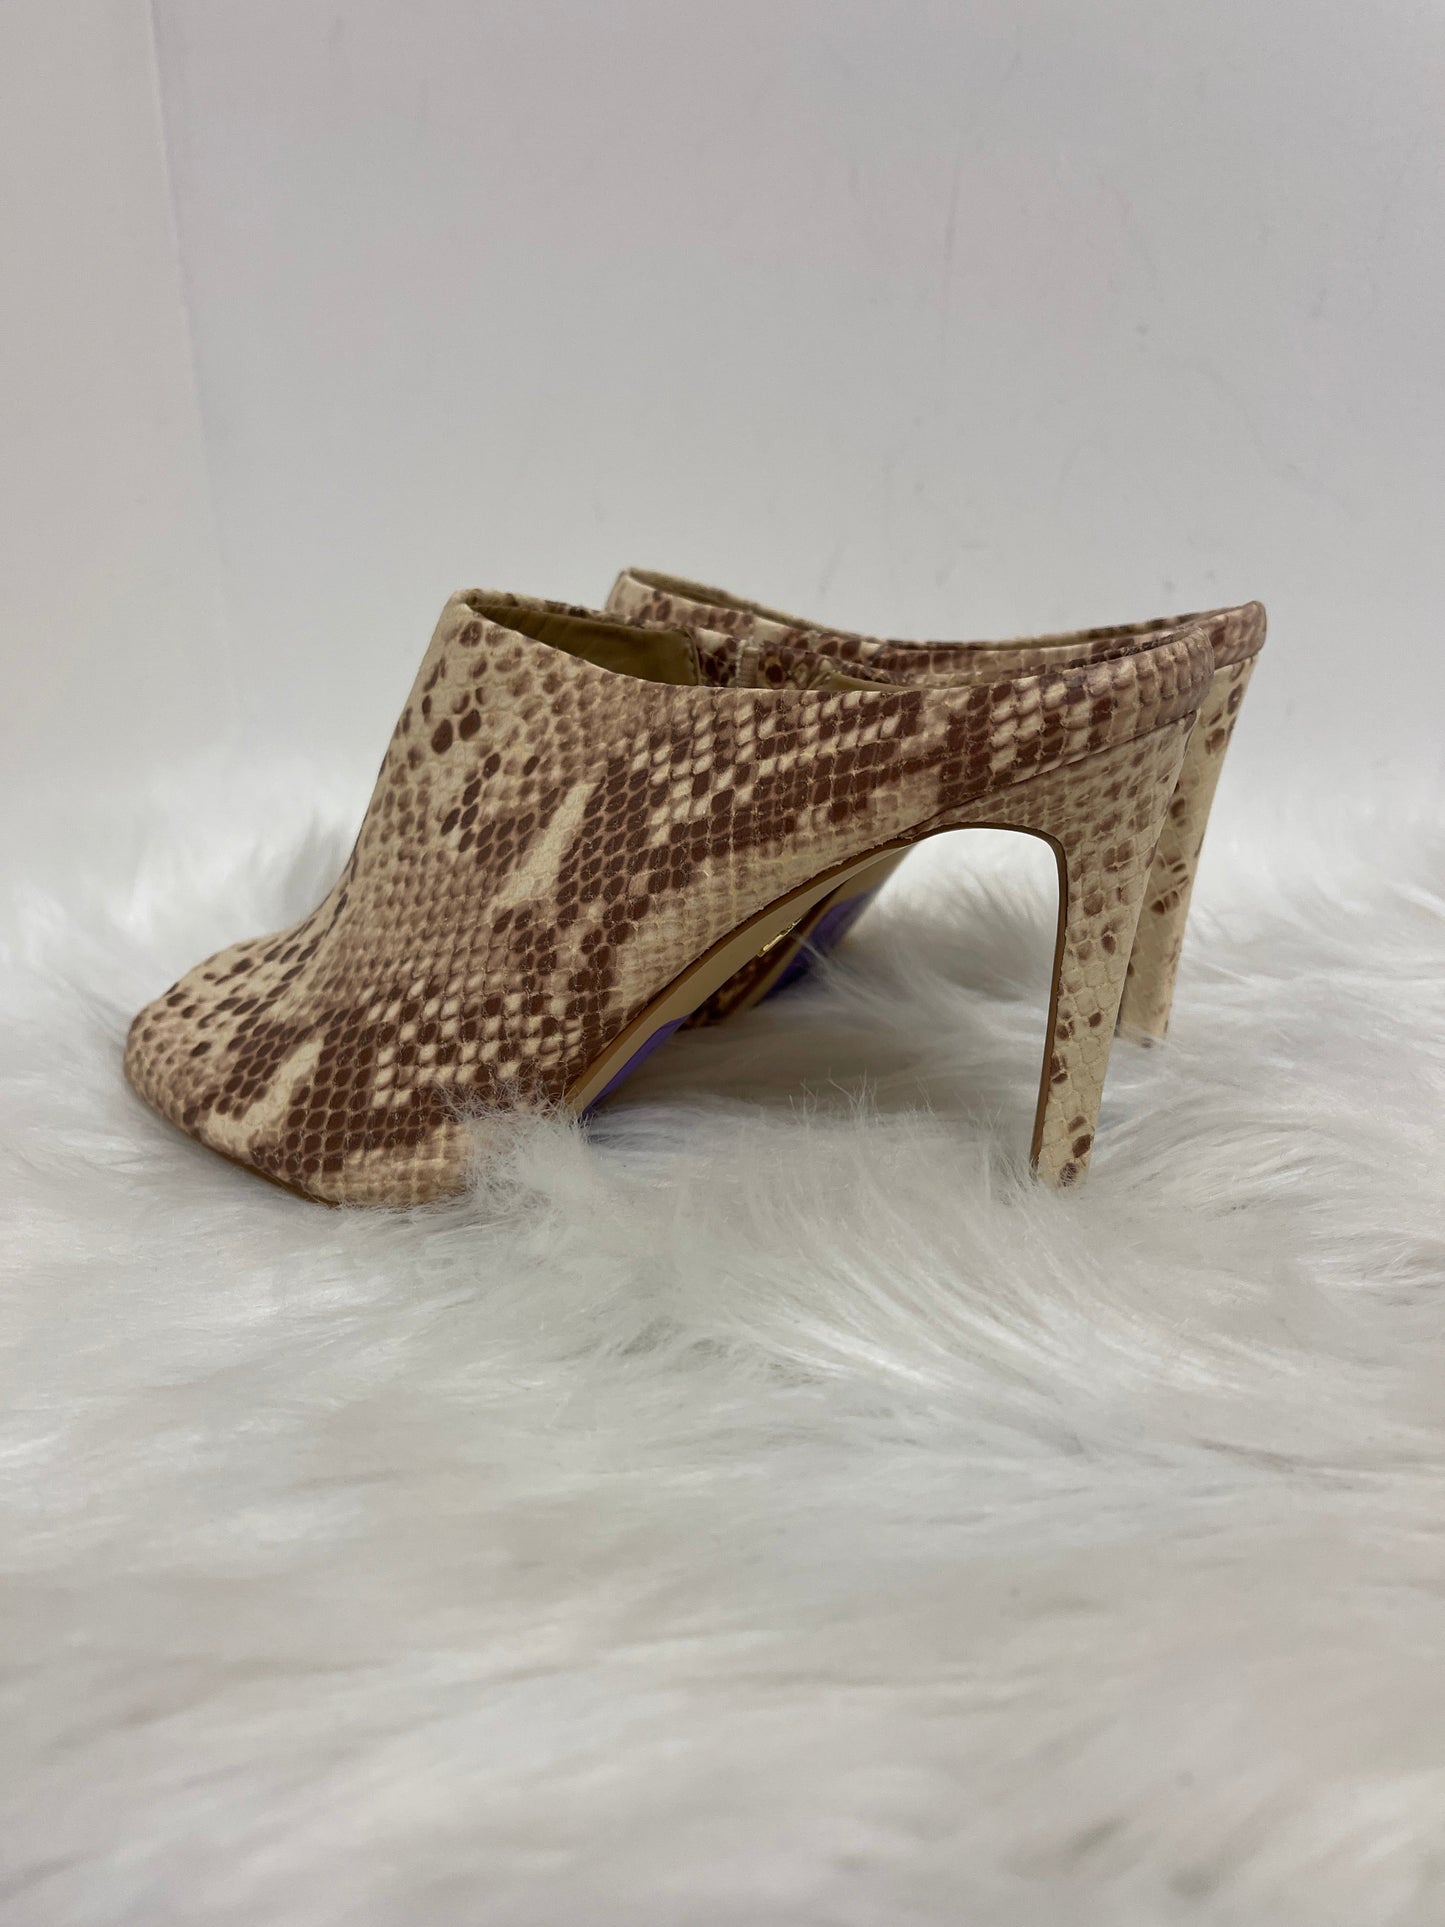 Snakeskin Print Shoes Heels Stiletto Ann Taylor, Size 8